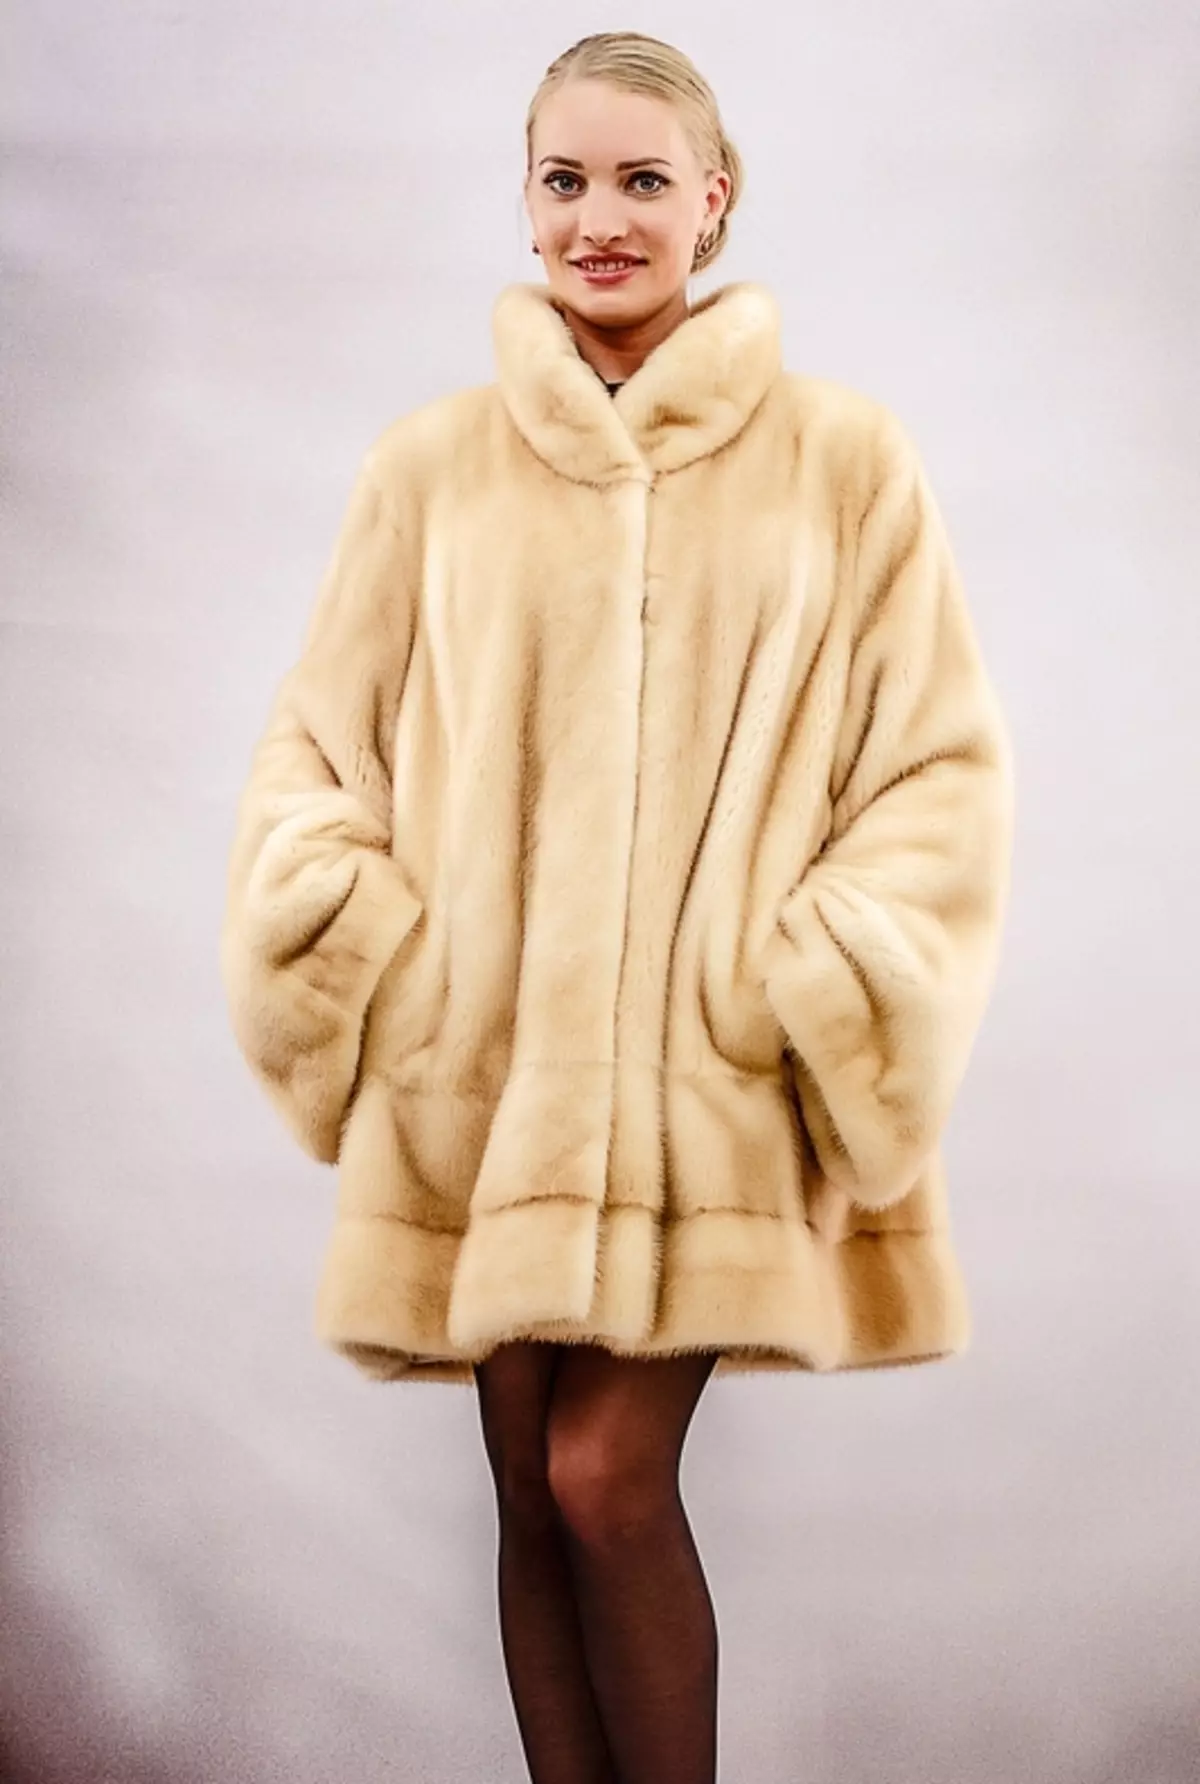 Mermeriny Fur Coats (37 foto): Recensione di modelli eleganti del marchio 325_12